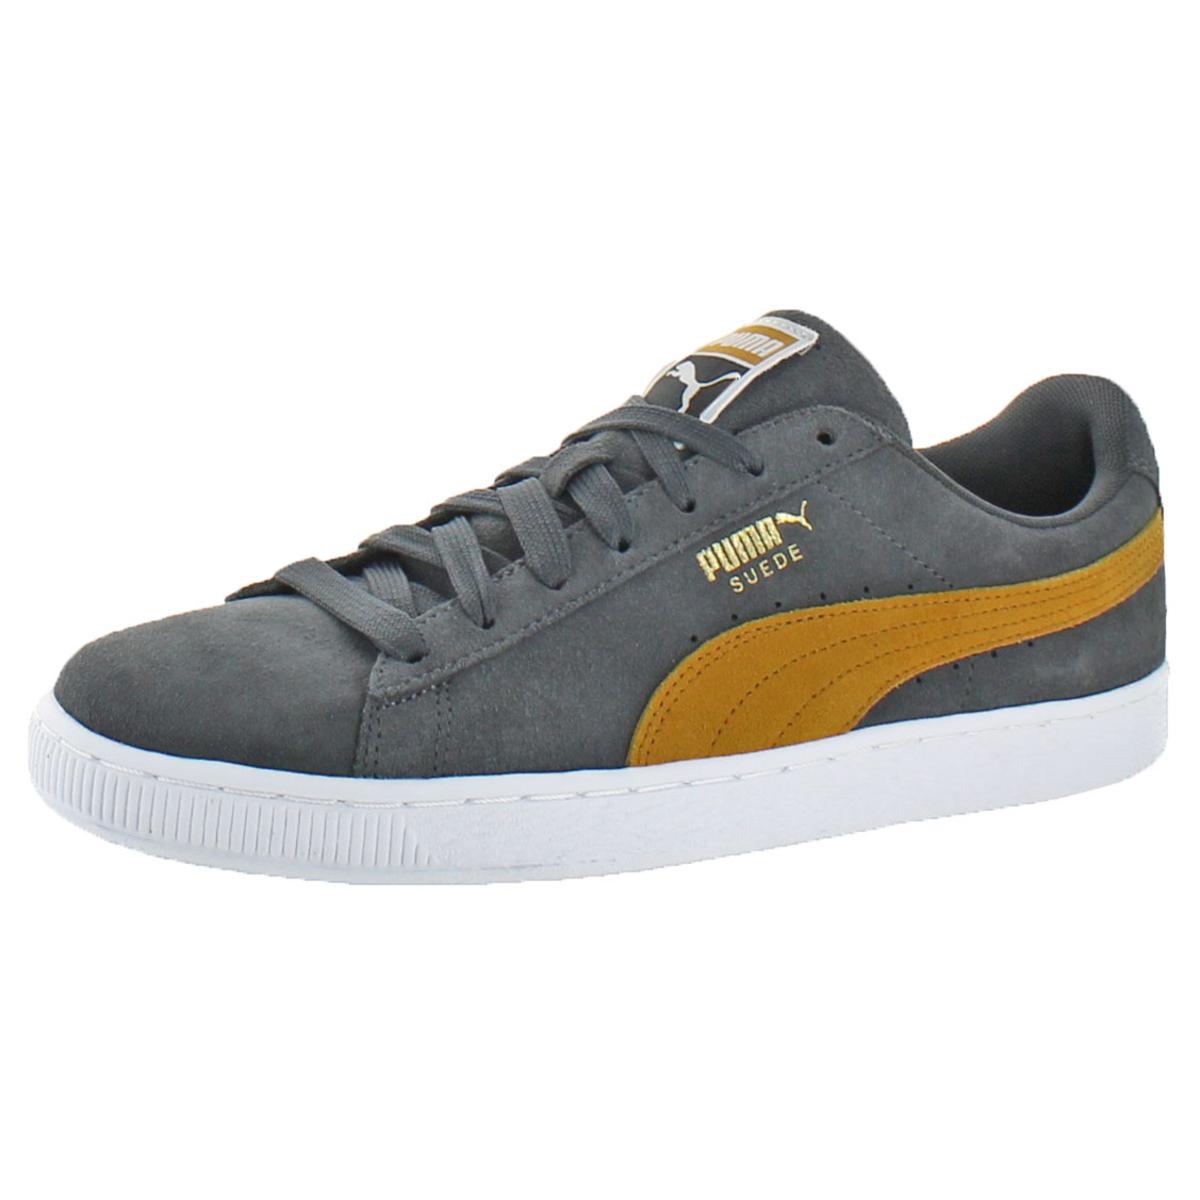 Puma Suede Classic Men's Fashion Sneakers Shoes | eBay